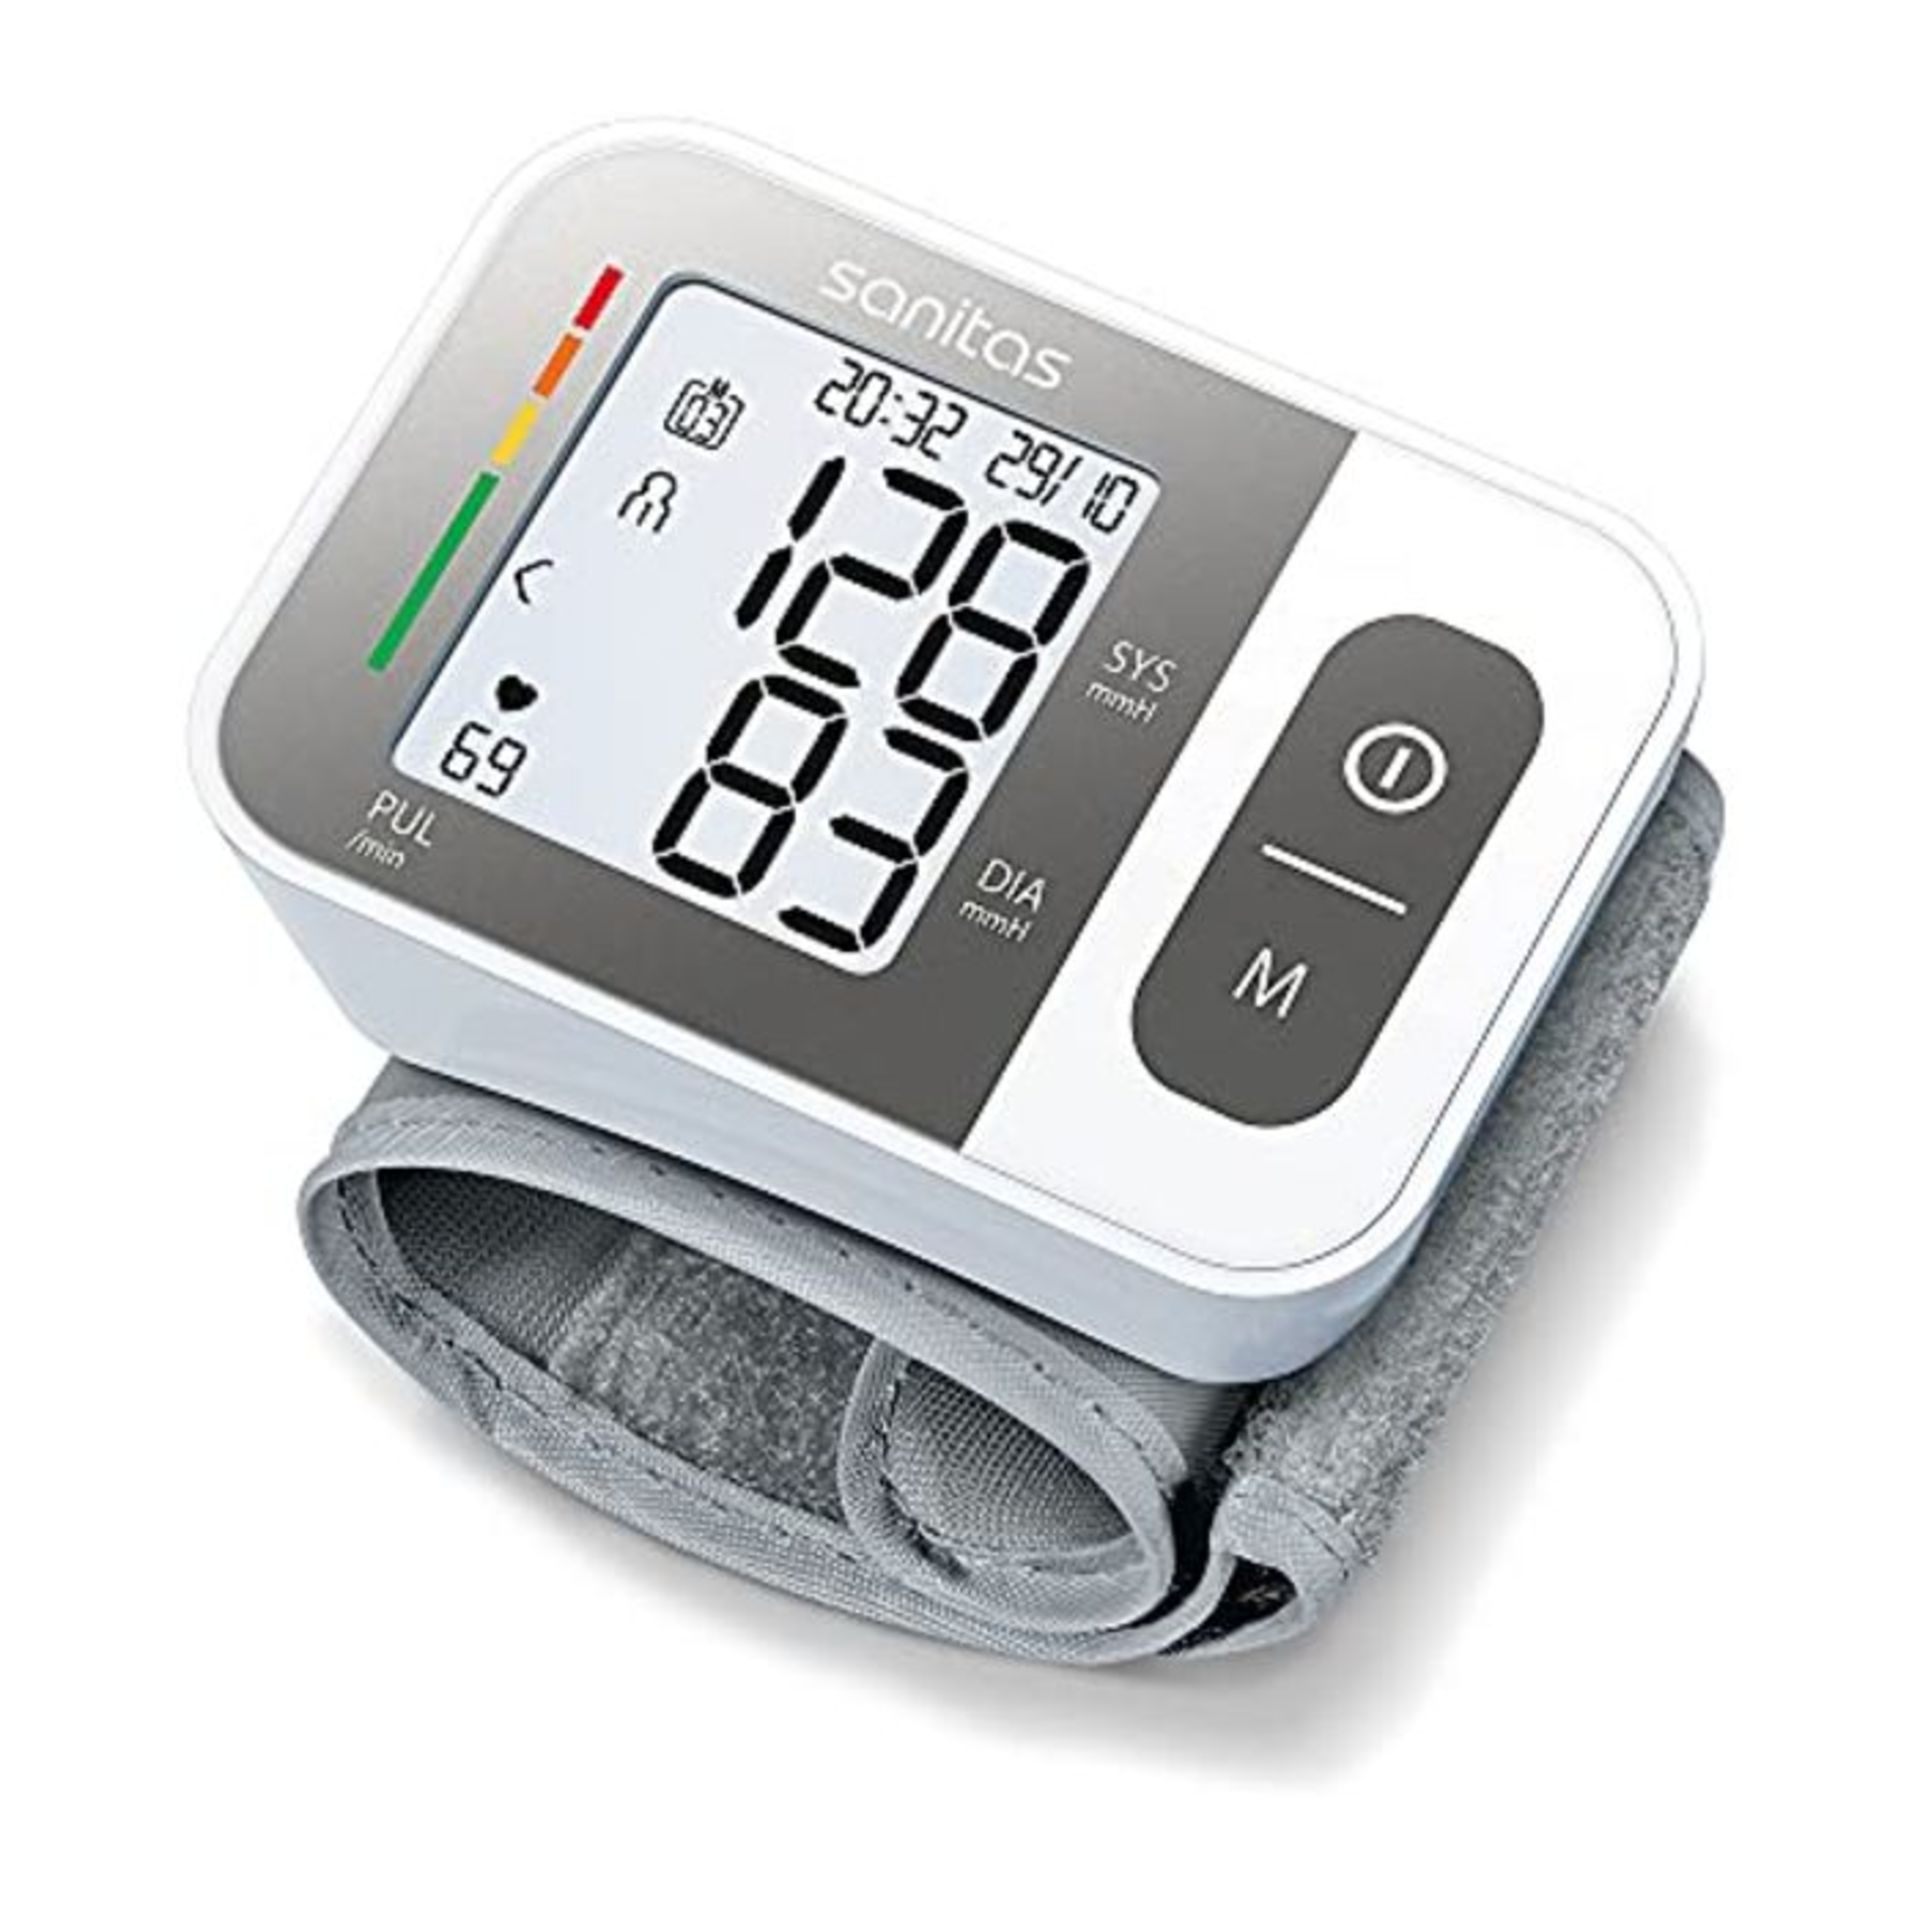 Sanitas SBC 15 Wrist blood pressure monitor, fully automatic blood pressure and pulse